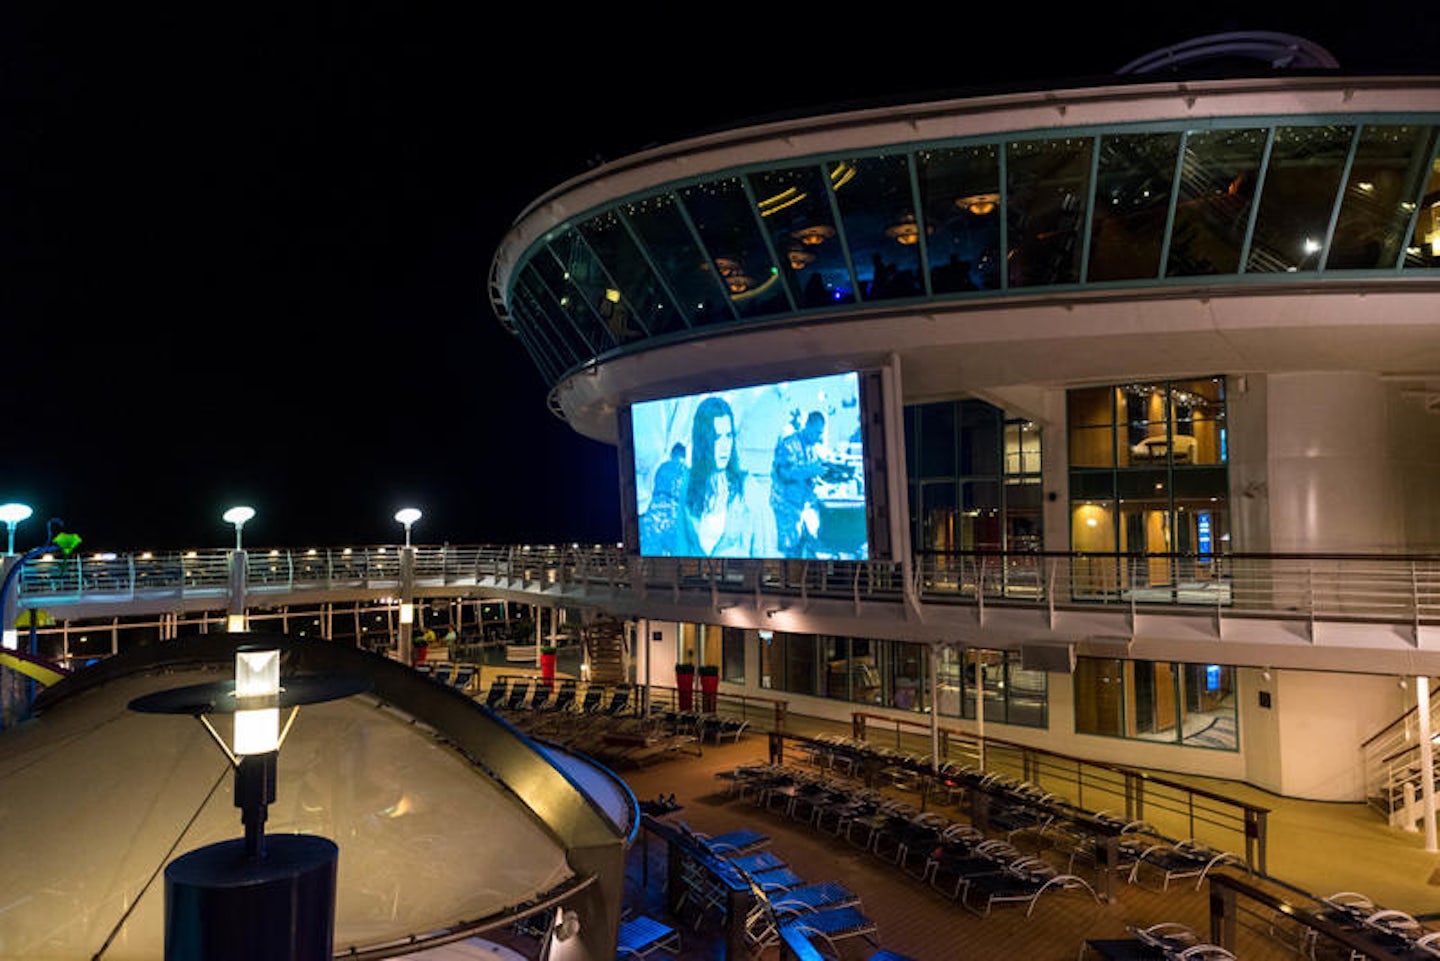 Outdoor Movie Screen on Adventure of the Seas